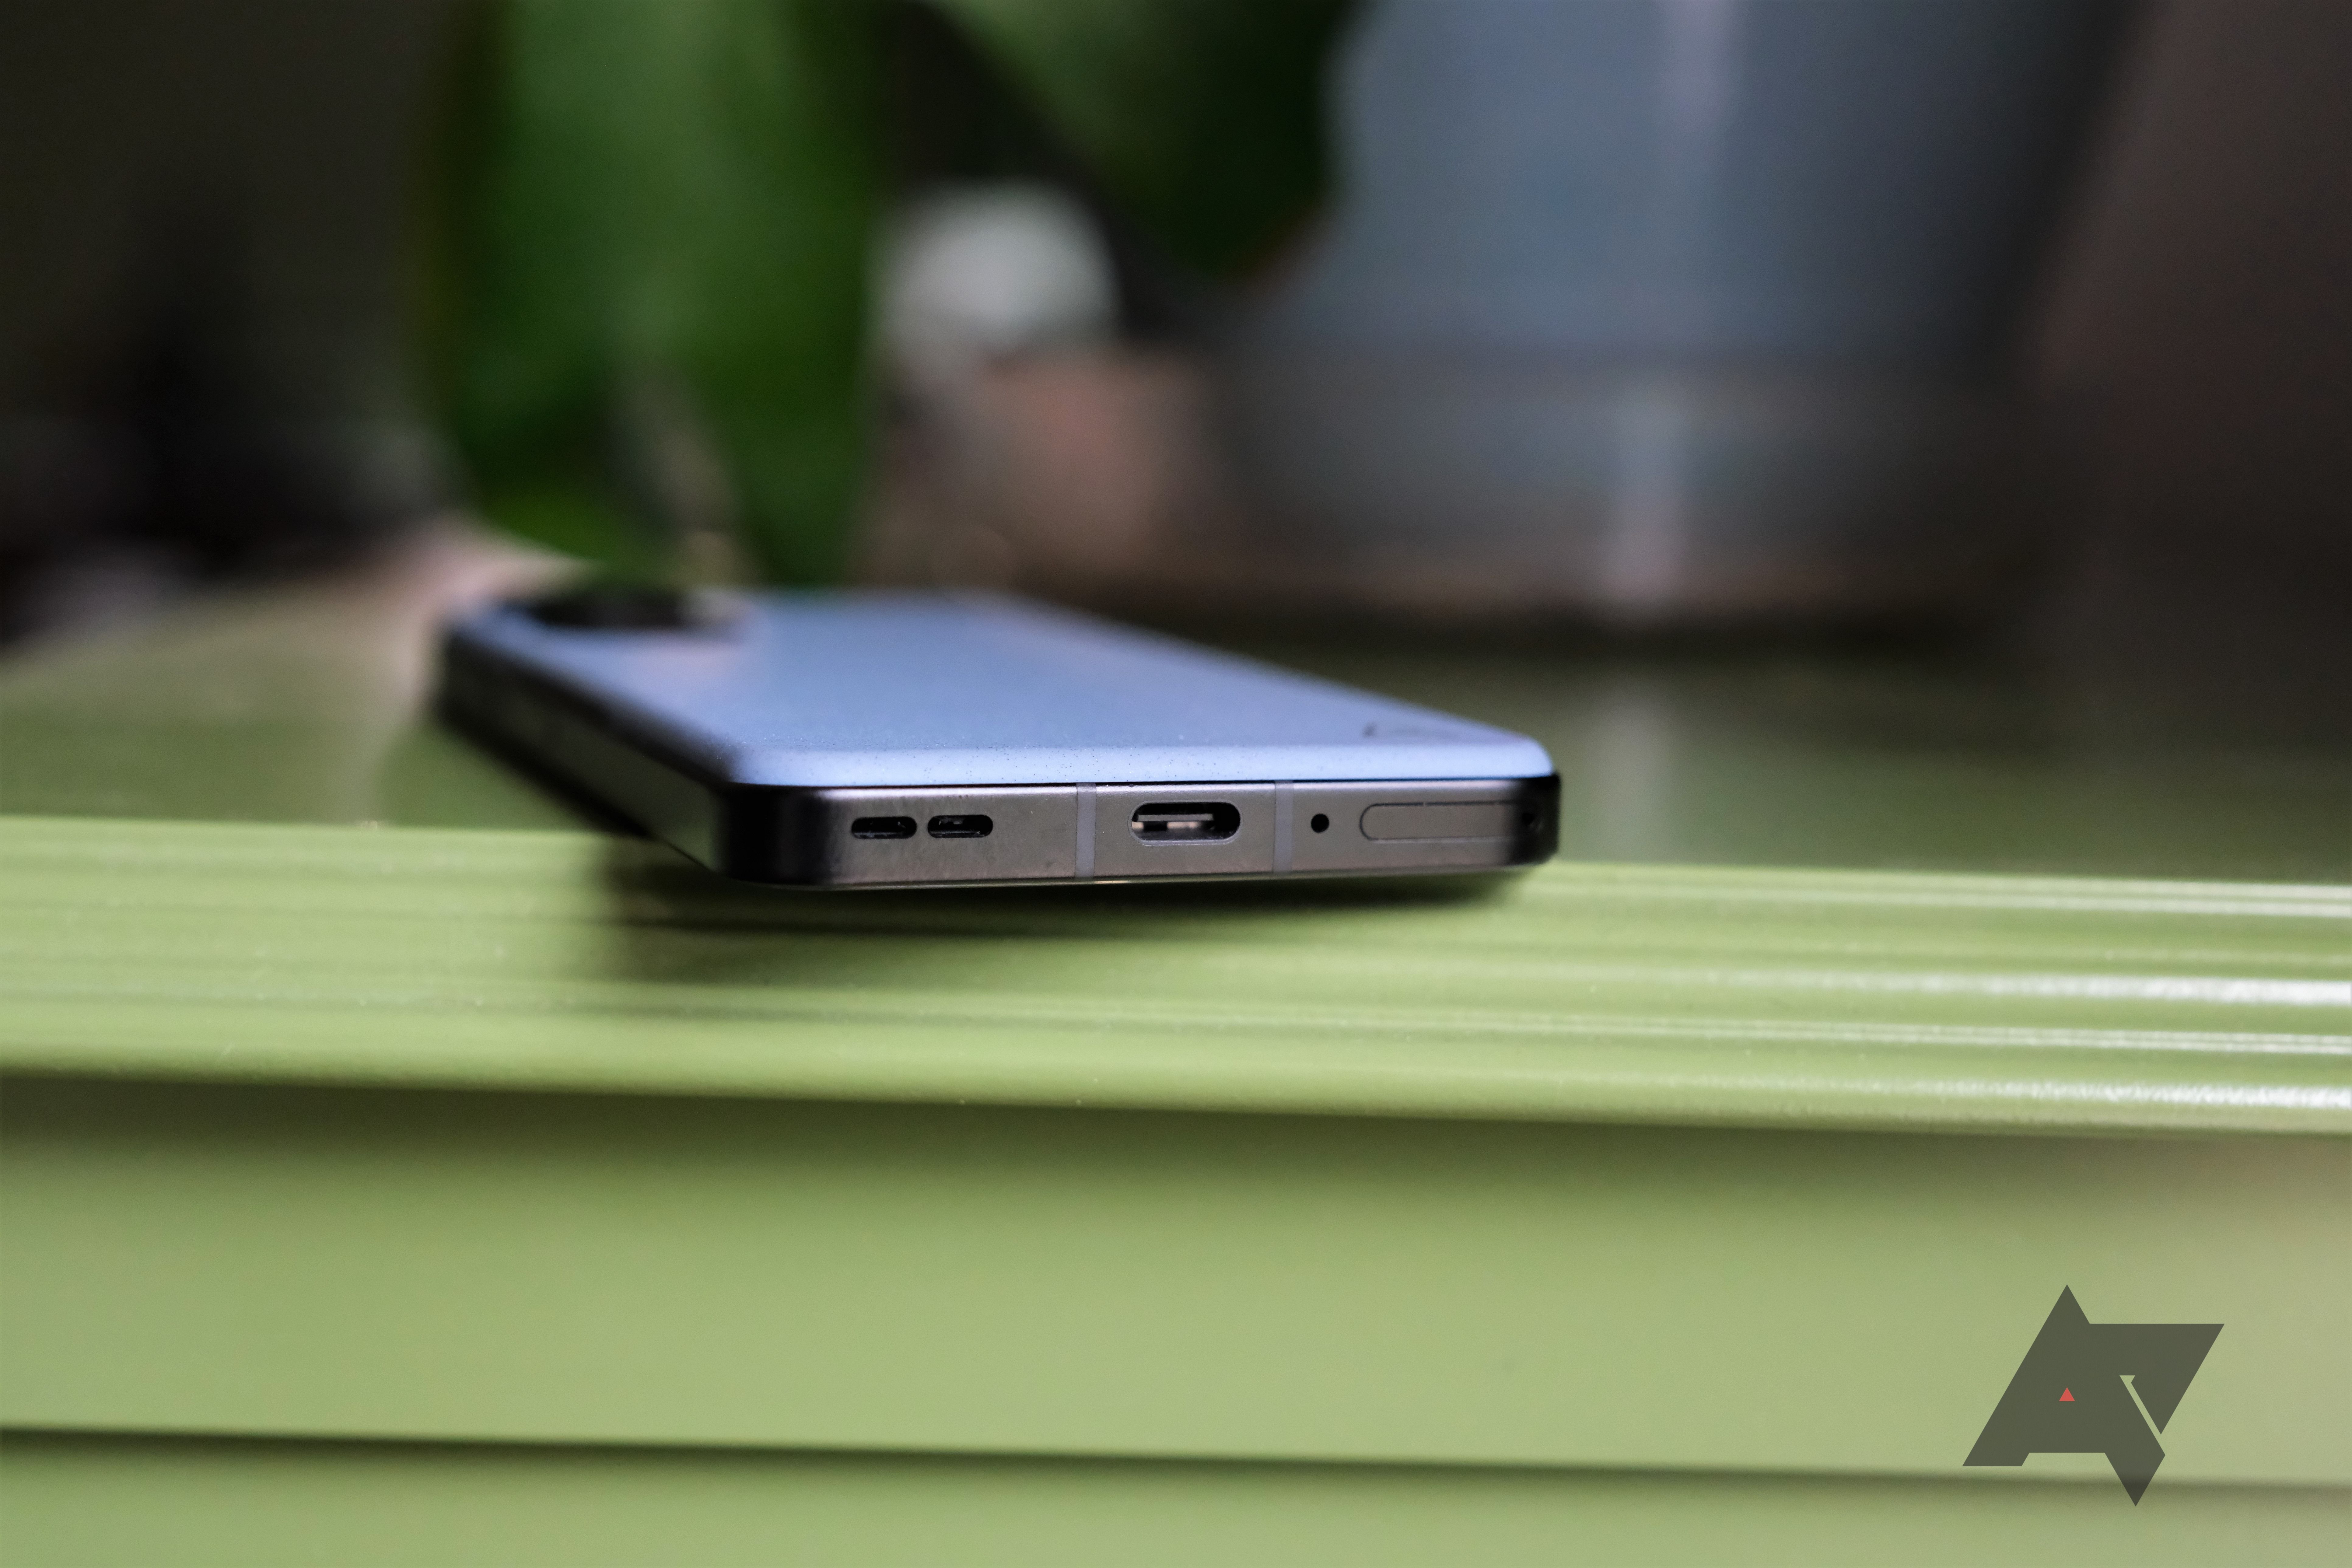 ASUS Zenfone 10 Phone Review